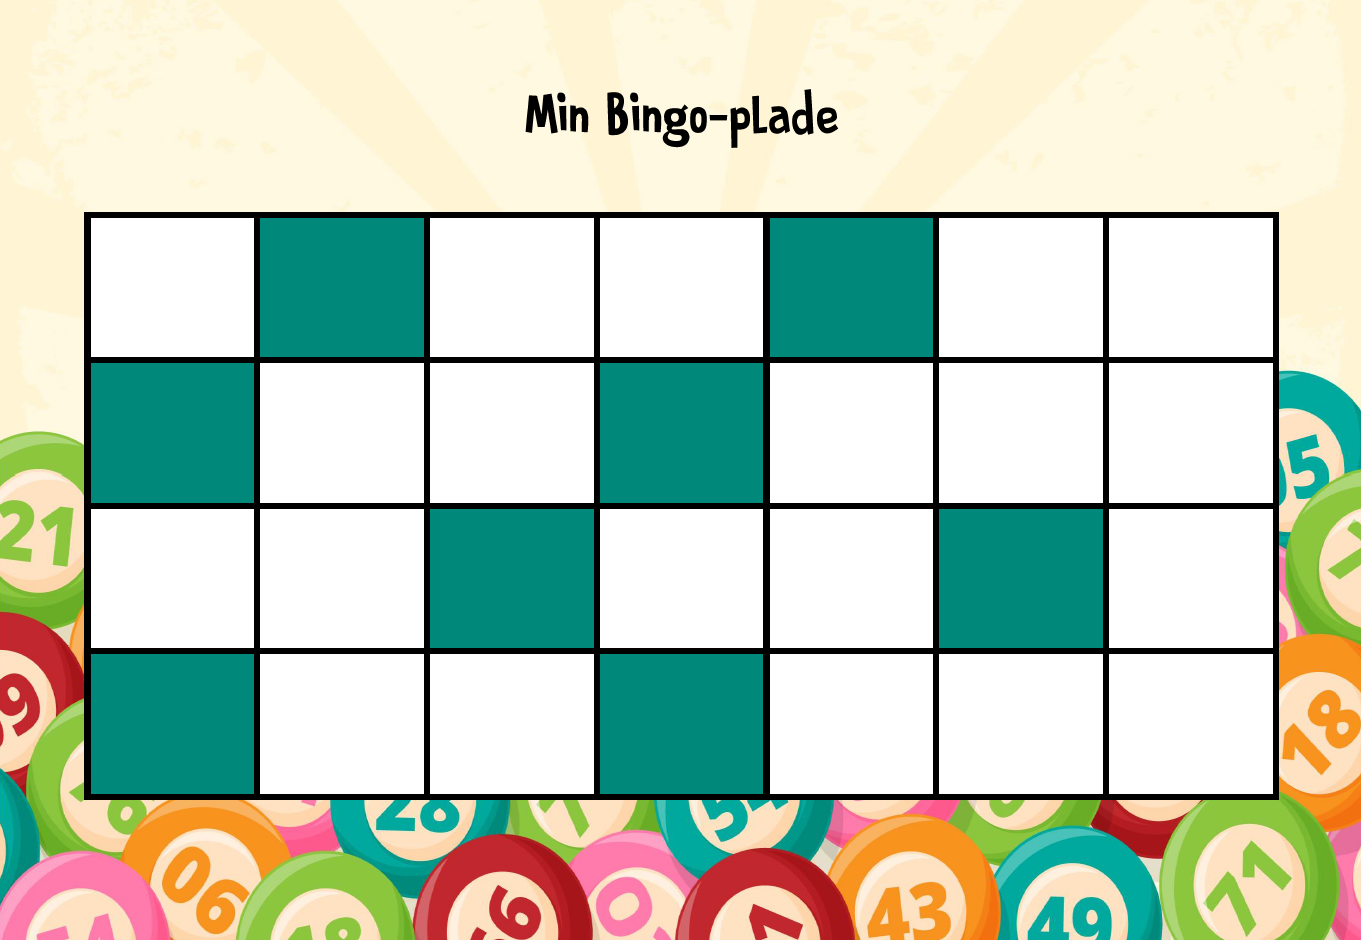 Bingo - din egen bingoplade -